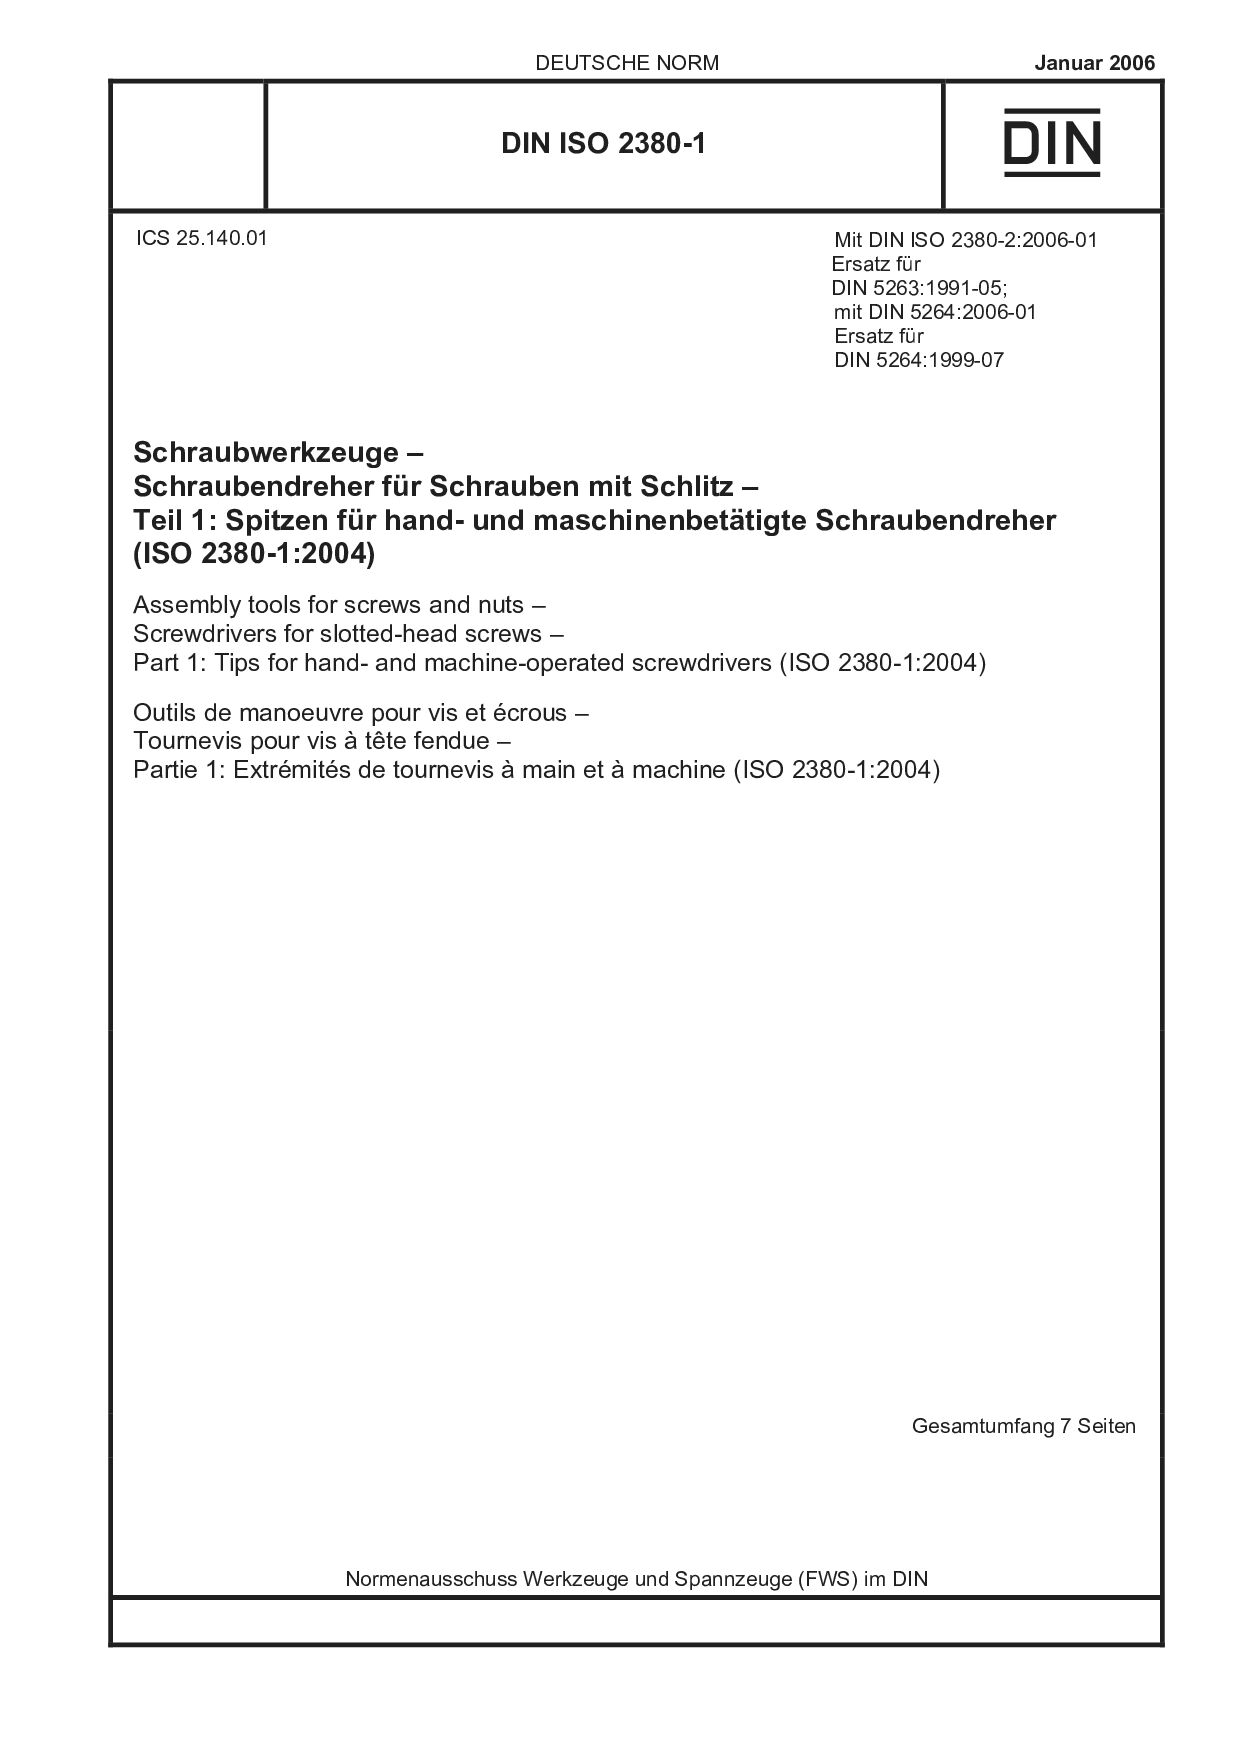 DIN ISO 2380-1:2006